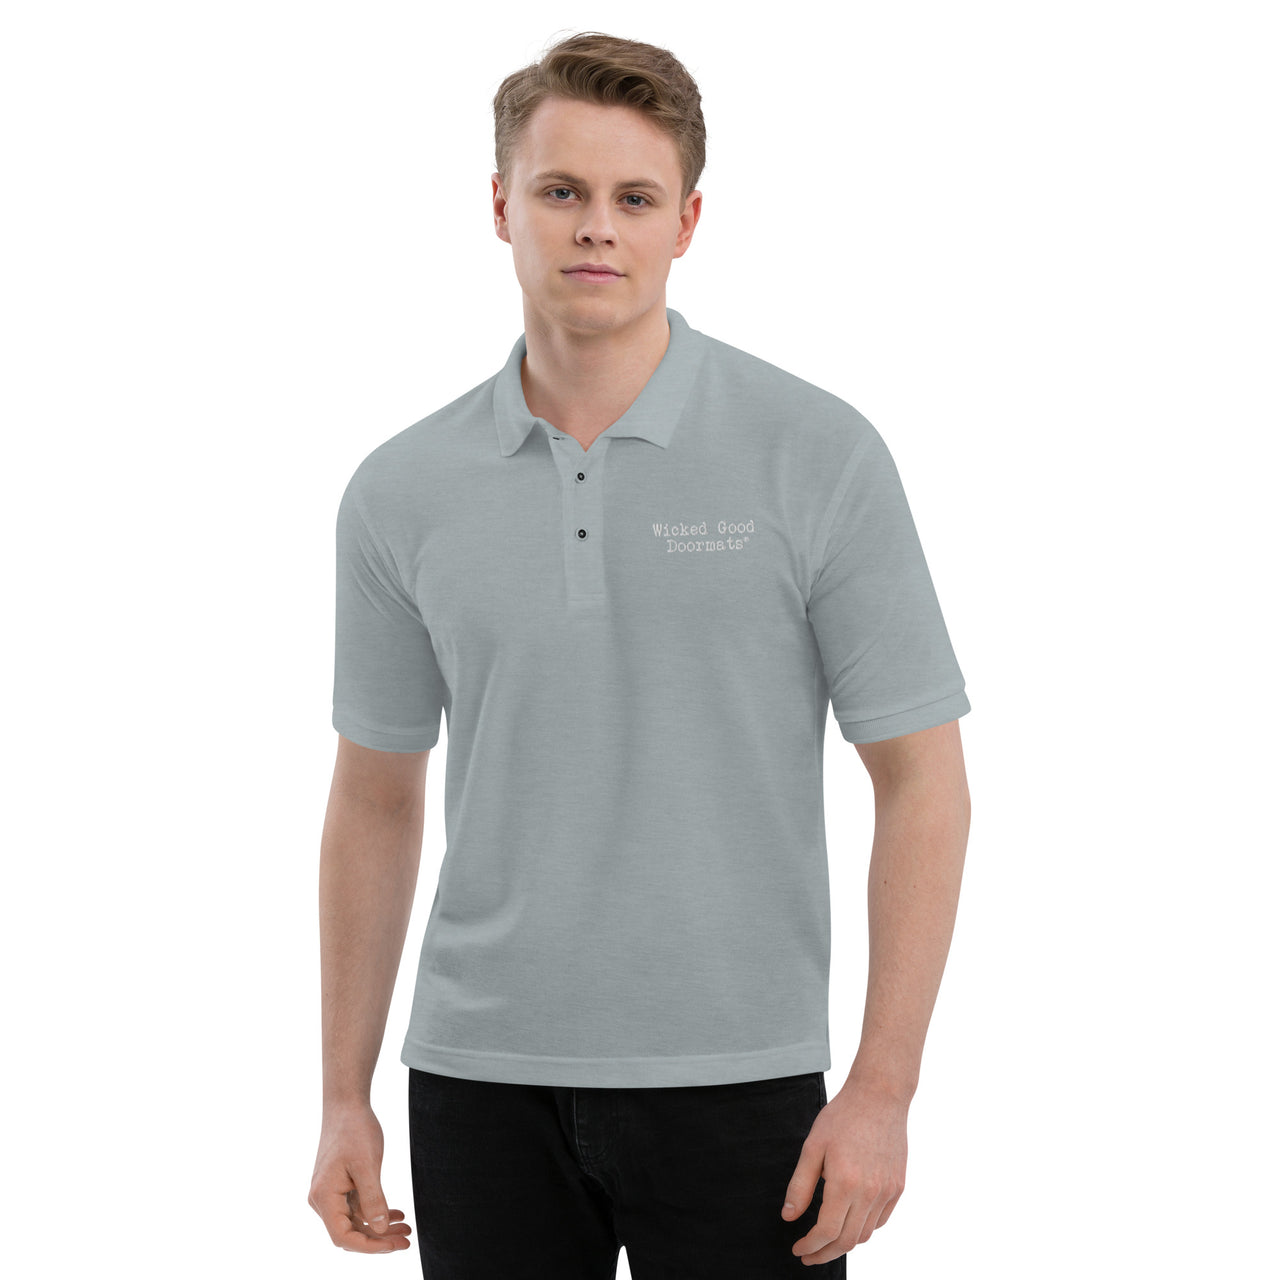 Men's Premium Polo Shirts & Tops New England Trading Co   